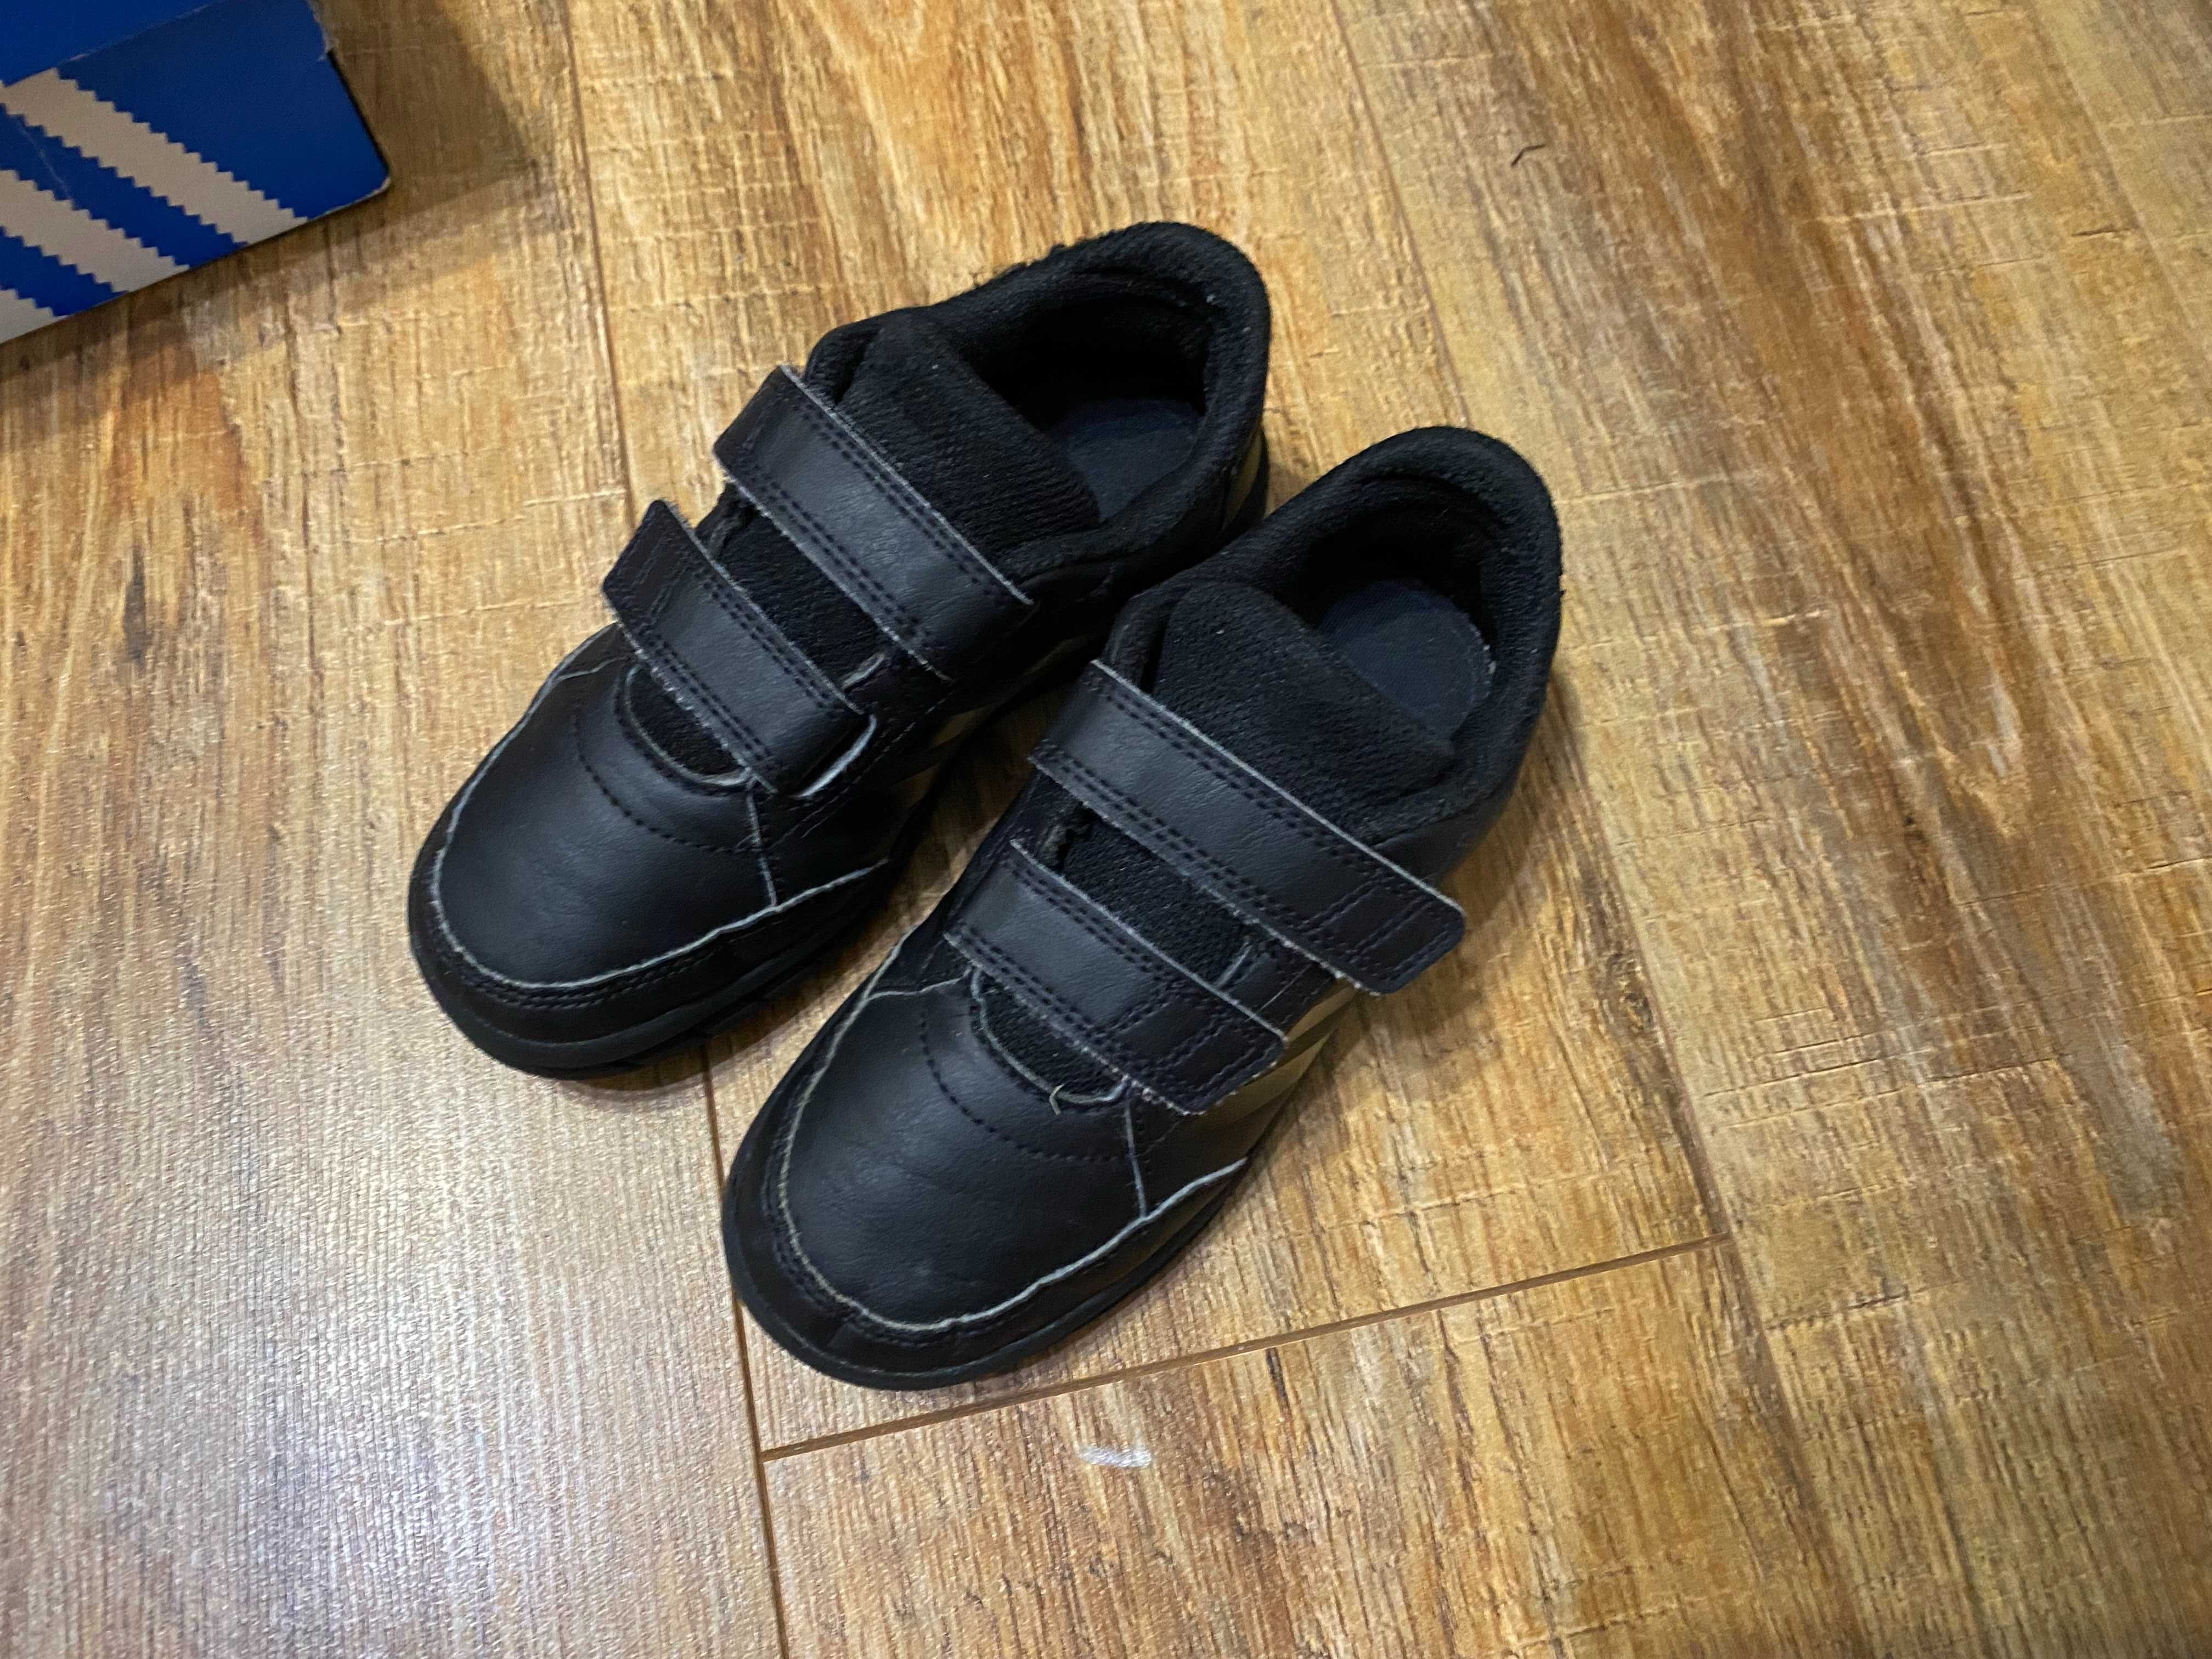 Adidas кроссовки кросівки на мальчика Адидас оригинал р.30